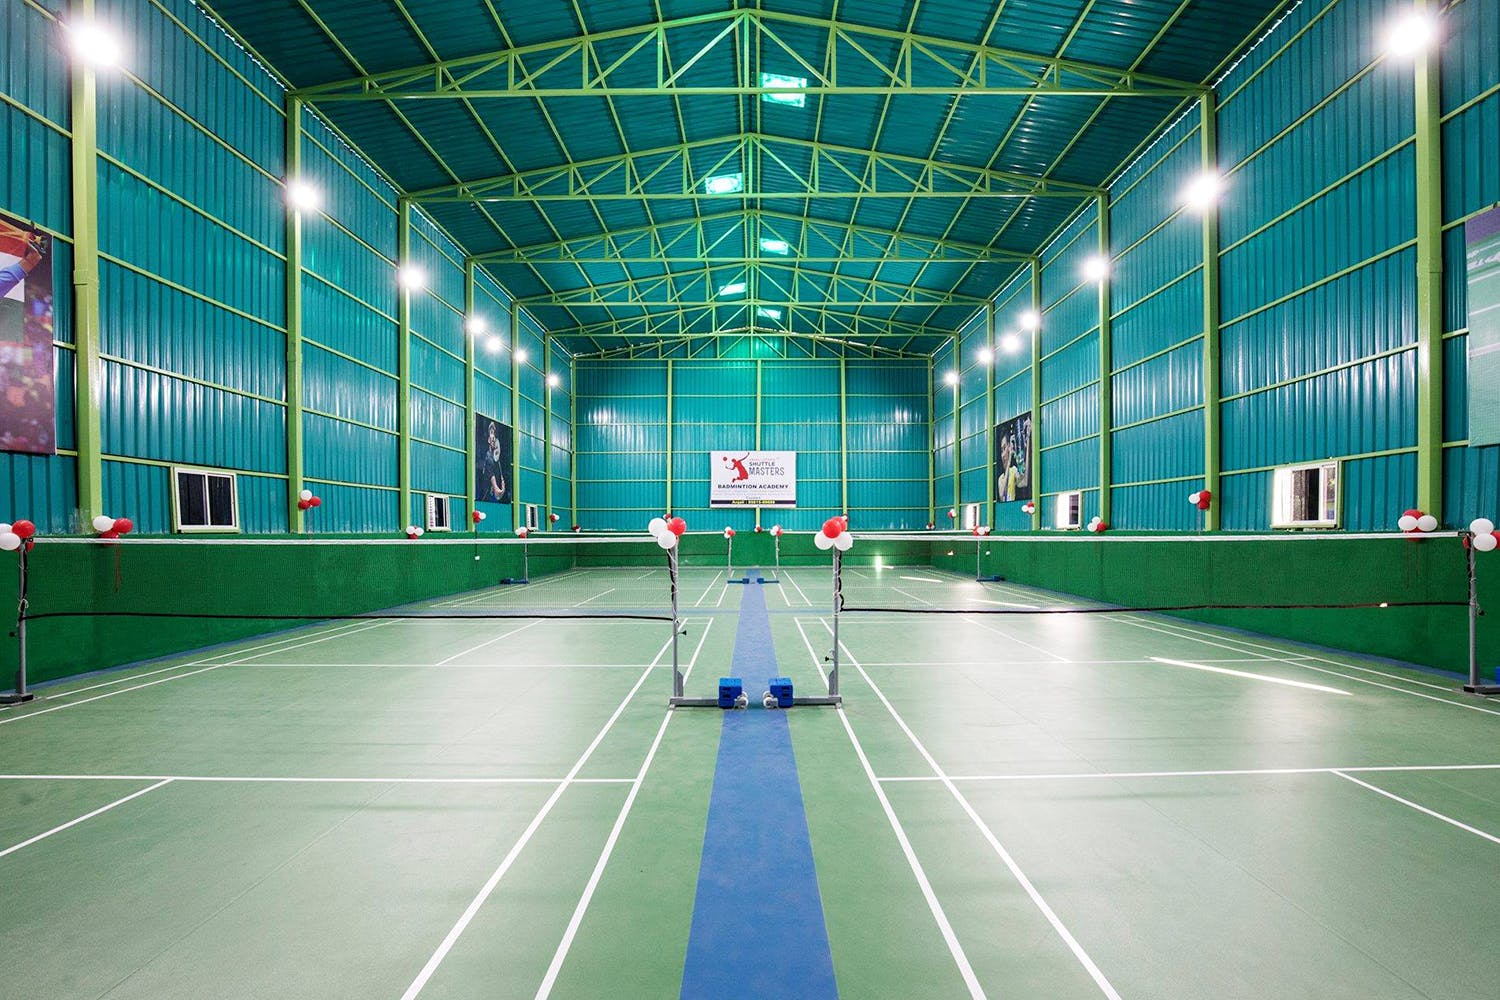 Sport venue,Leisure centre,Room,Building,Sports,Field house,Leisure,Racquet sport,Games,Hall